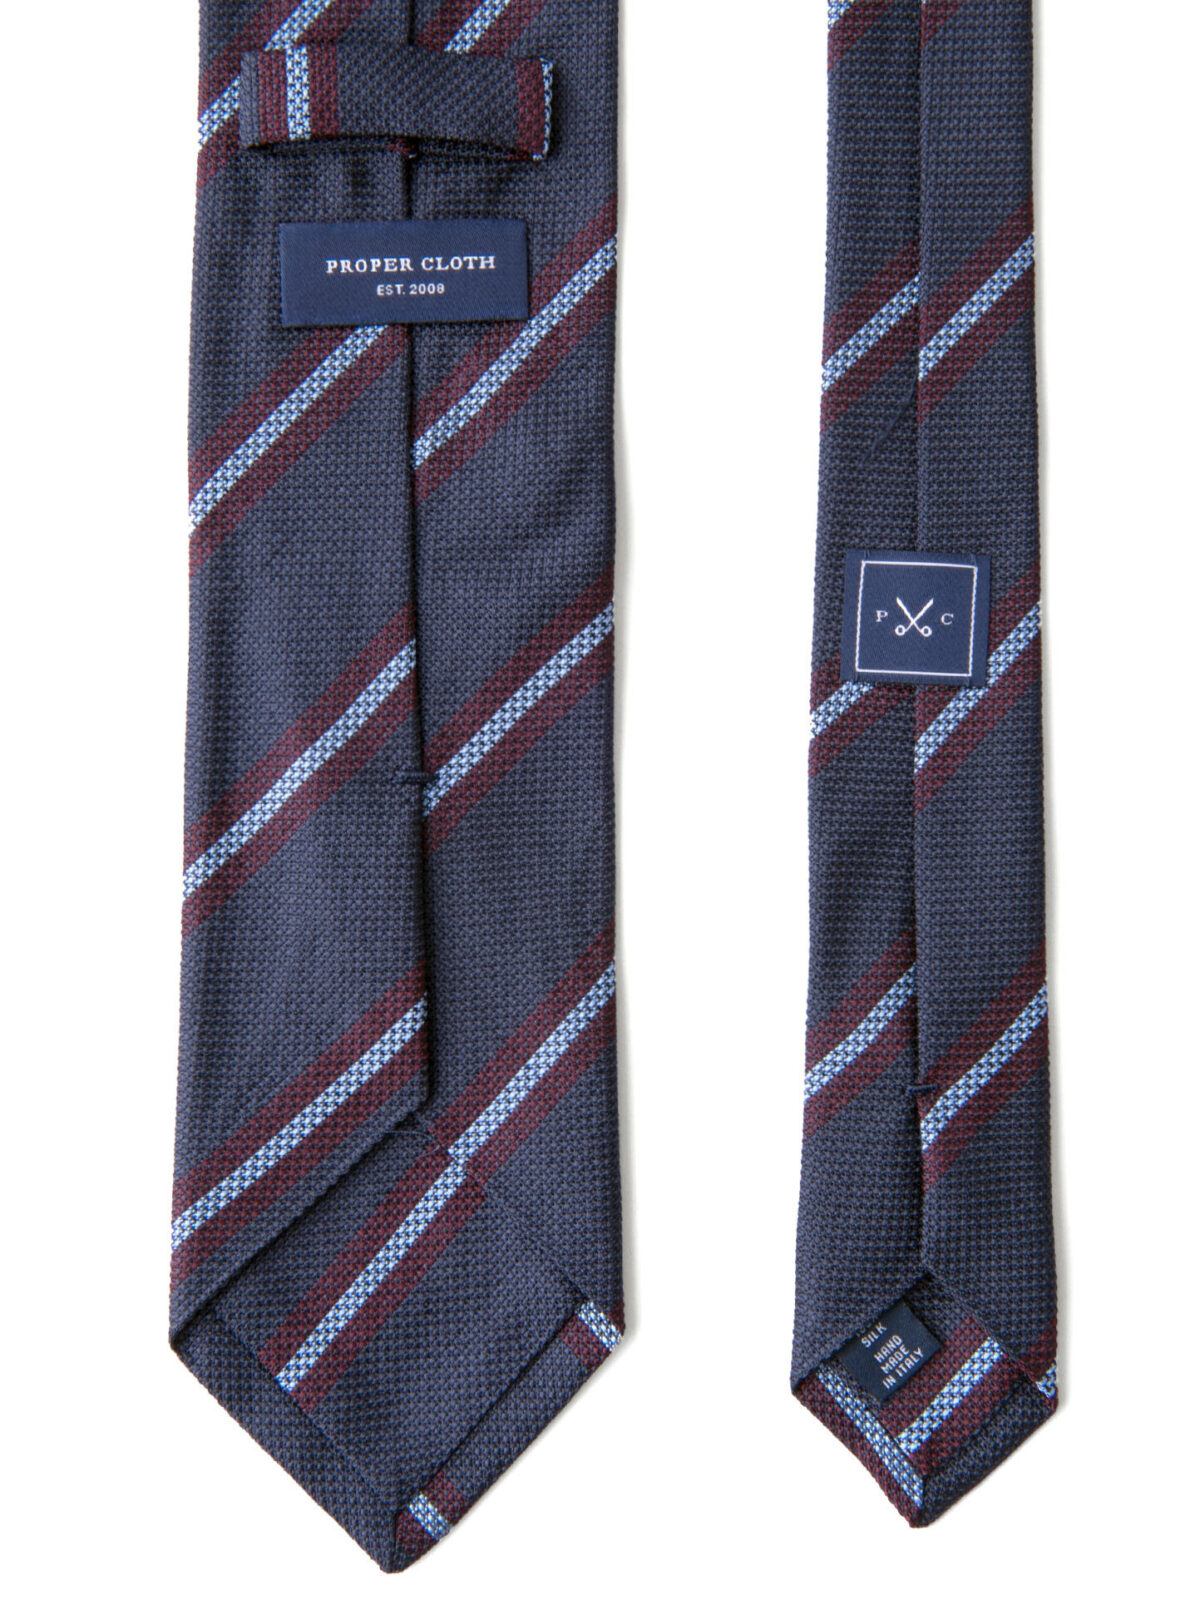 Navy Red and Light Blue Striped Silk Grenadine Tie by Proper Cloth